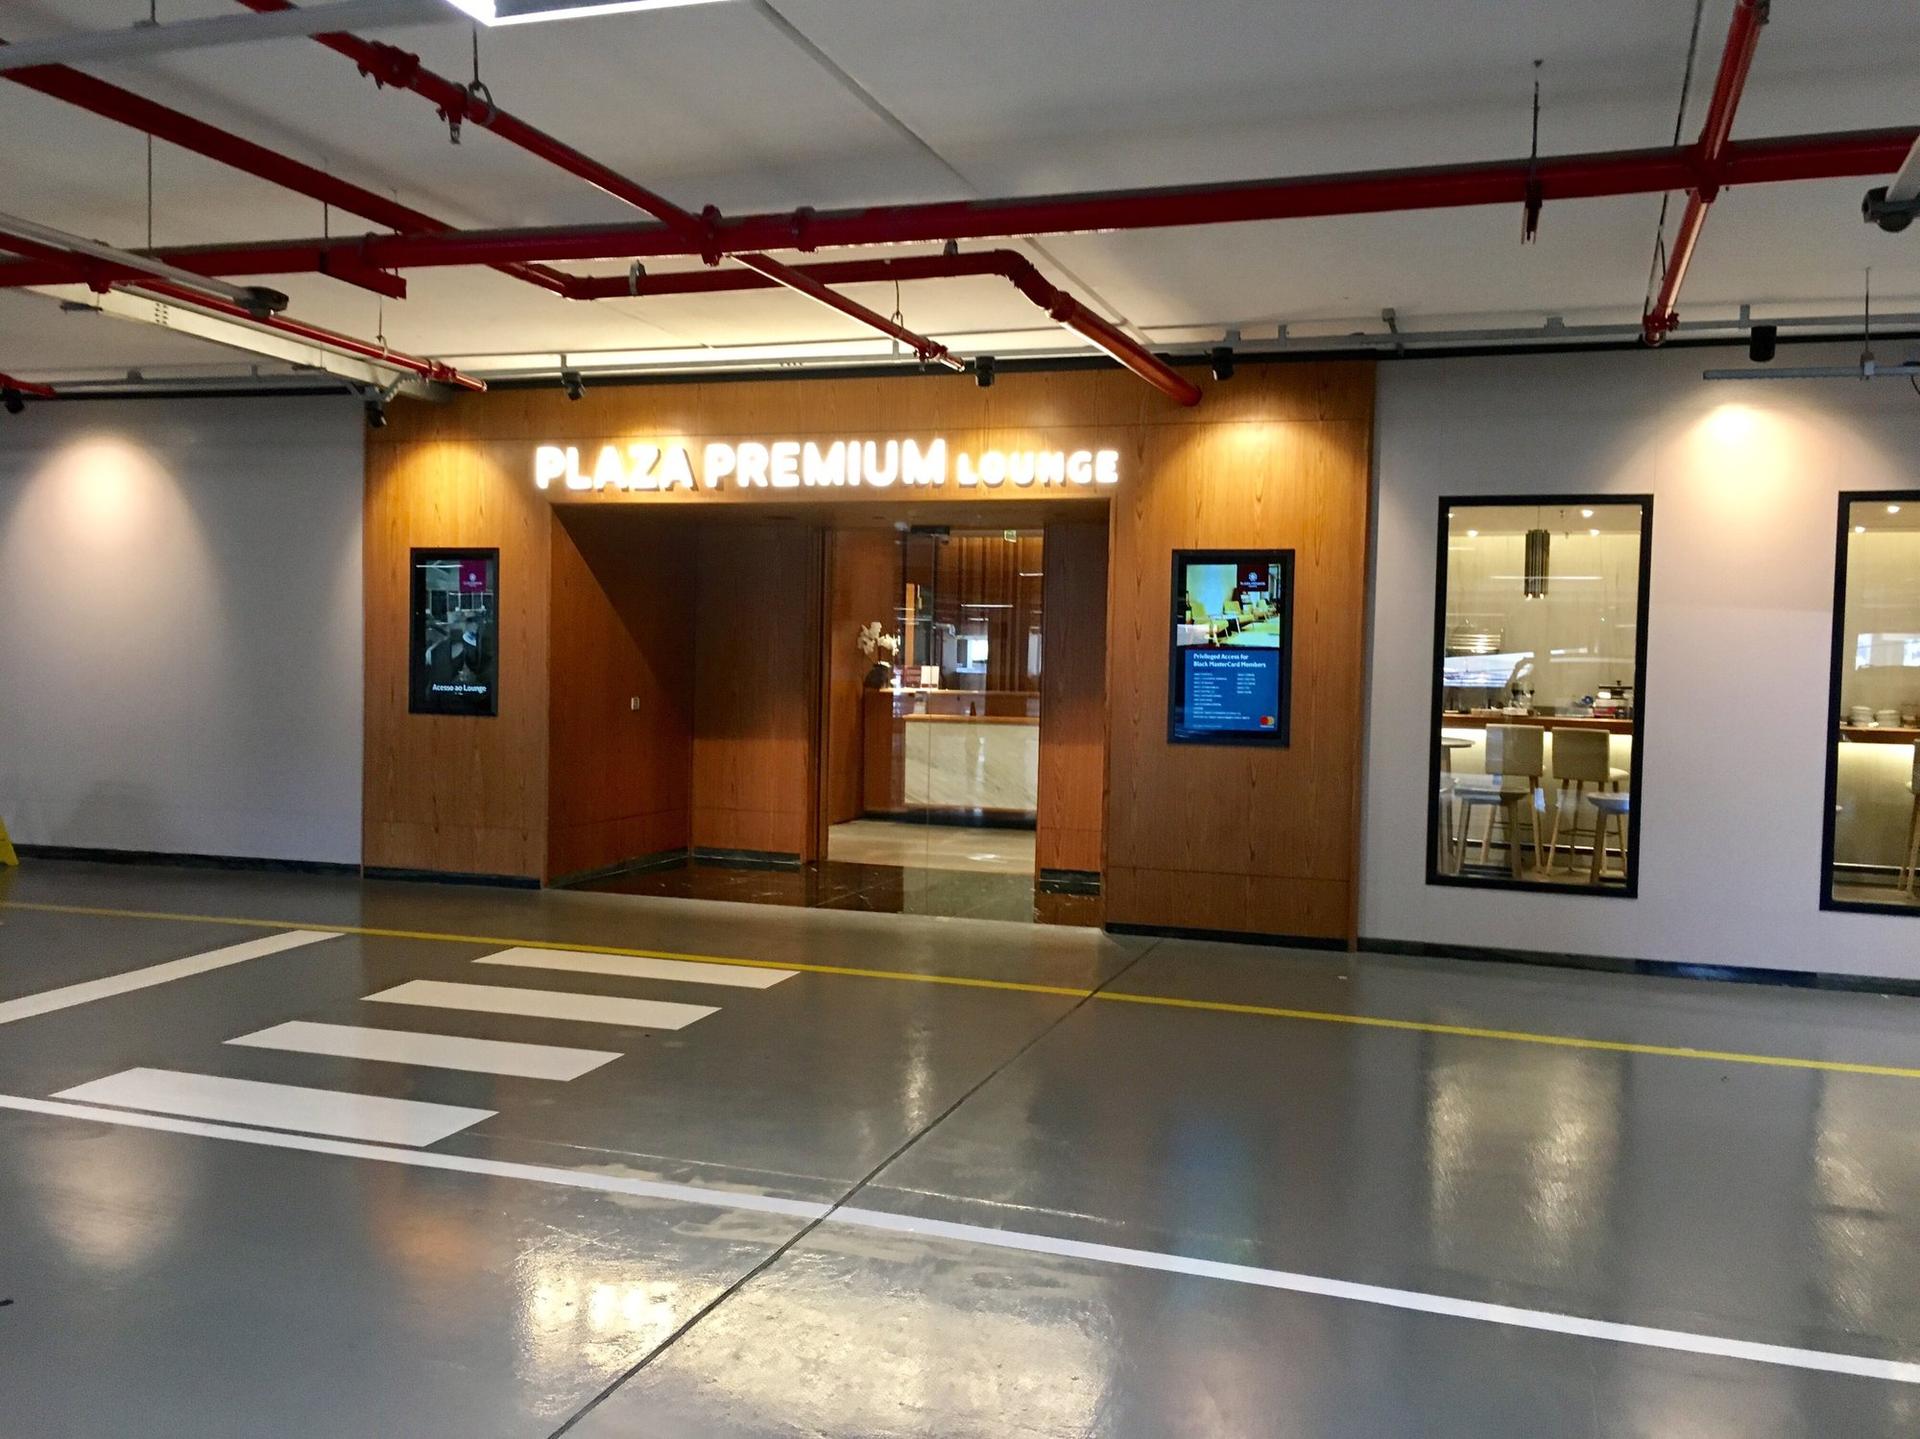 Plaza Premium Lounge (Arrivals) image 21 of 22